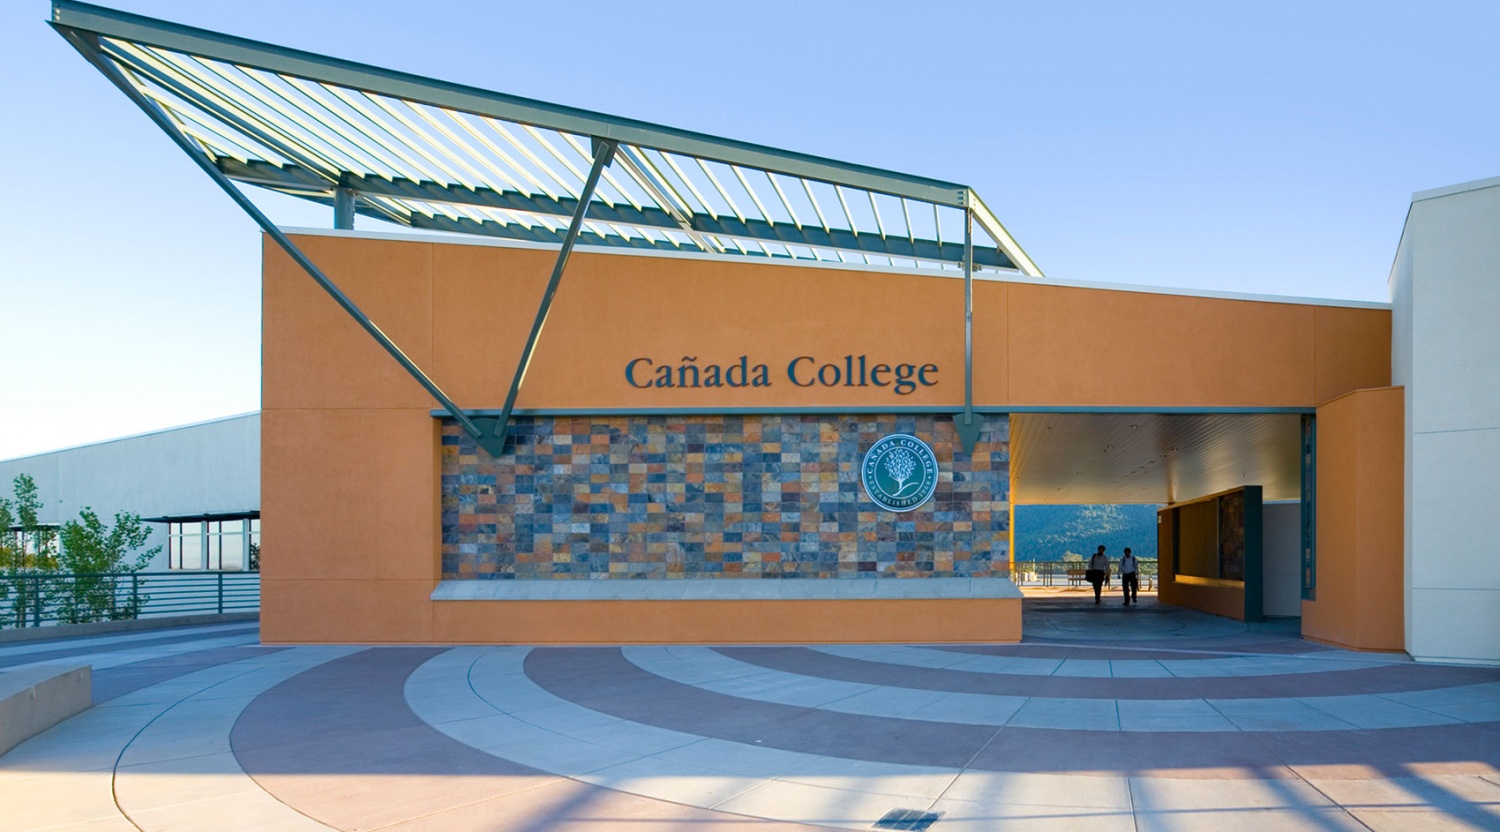 Cañada College Library & Student Resource Center | Noll & Tam